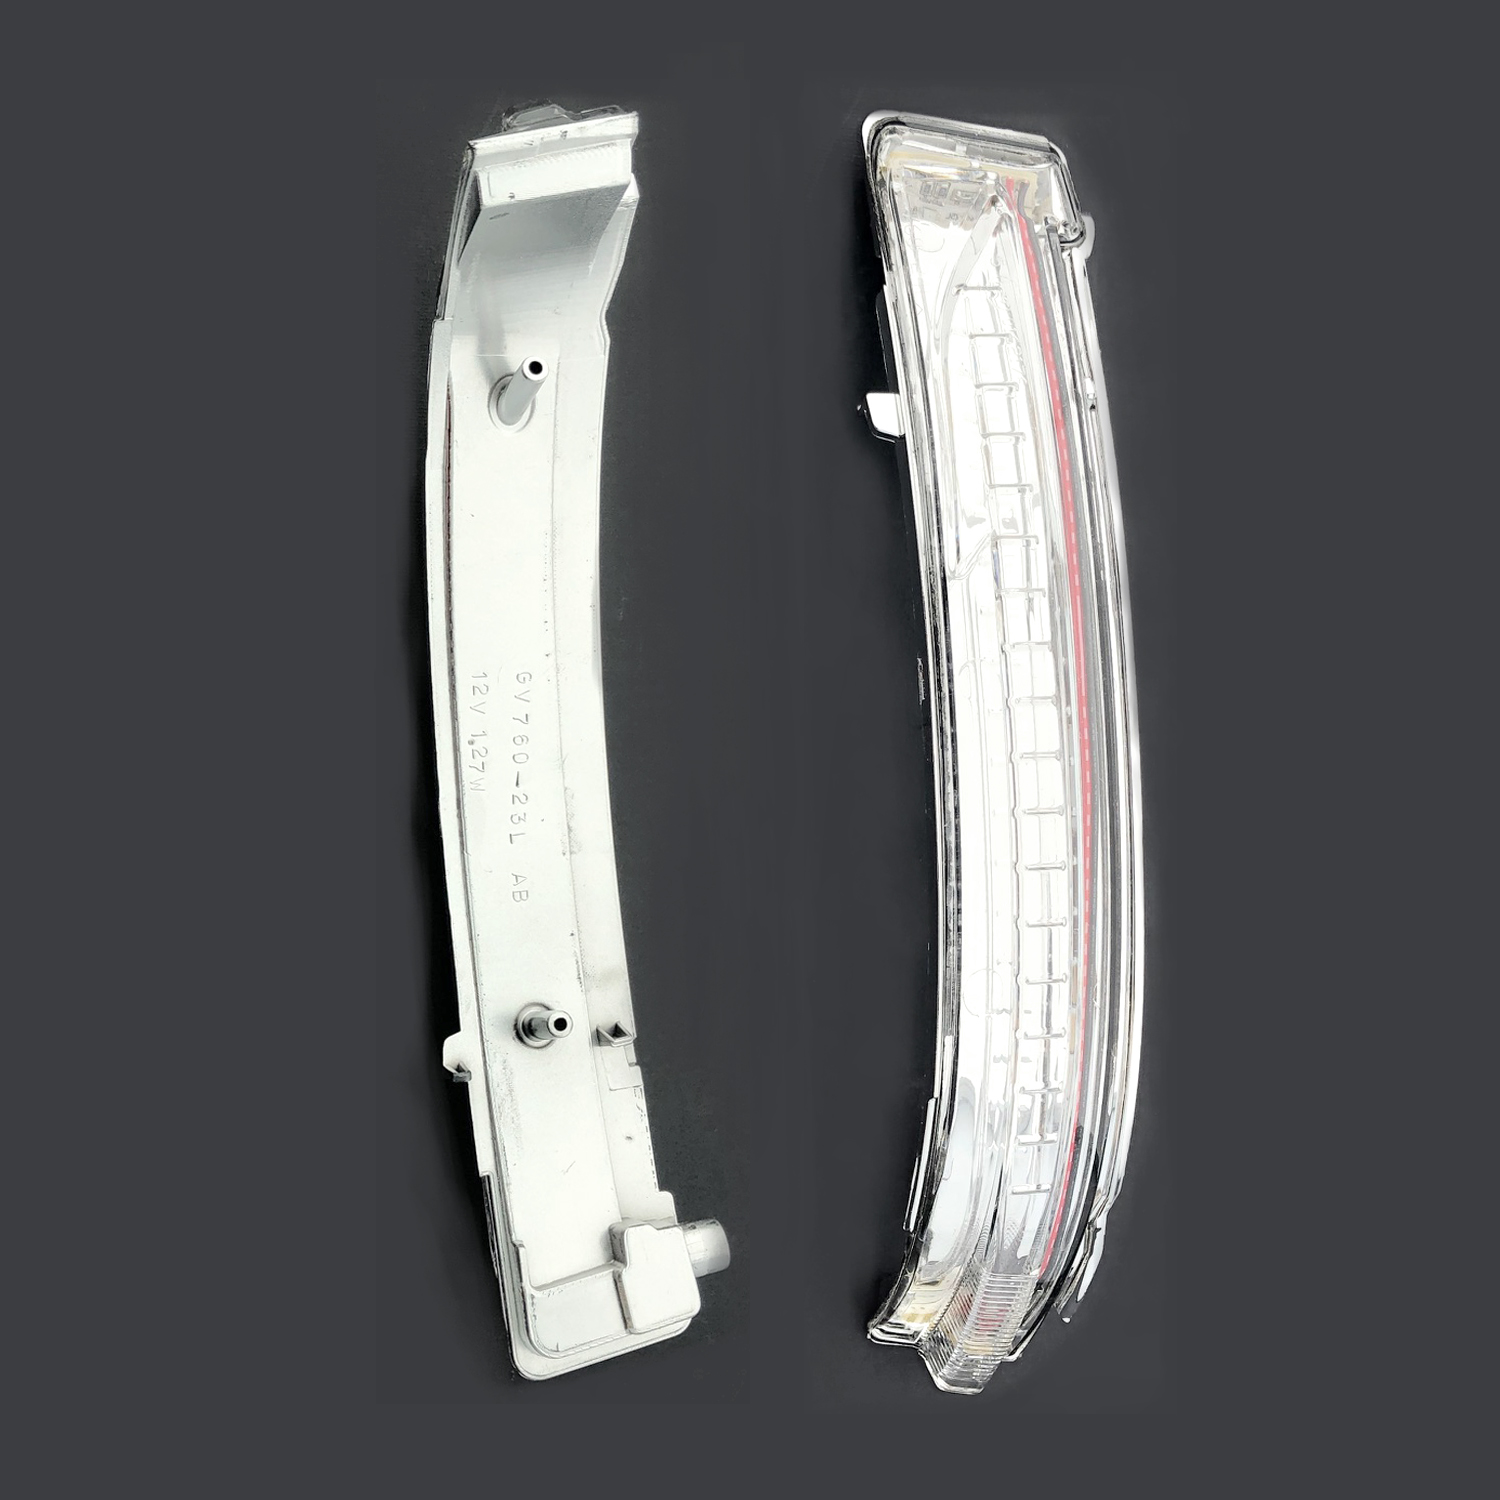 Nissan Juke Wing Mirror Indicator LEFT HAND ( UK Passenger Side ) 2015 to 2020 – Wing Mirror Indicator ( Fits for F15 Model )